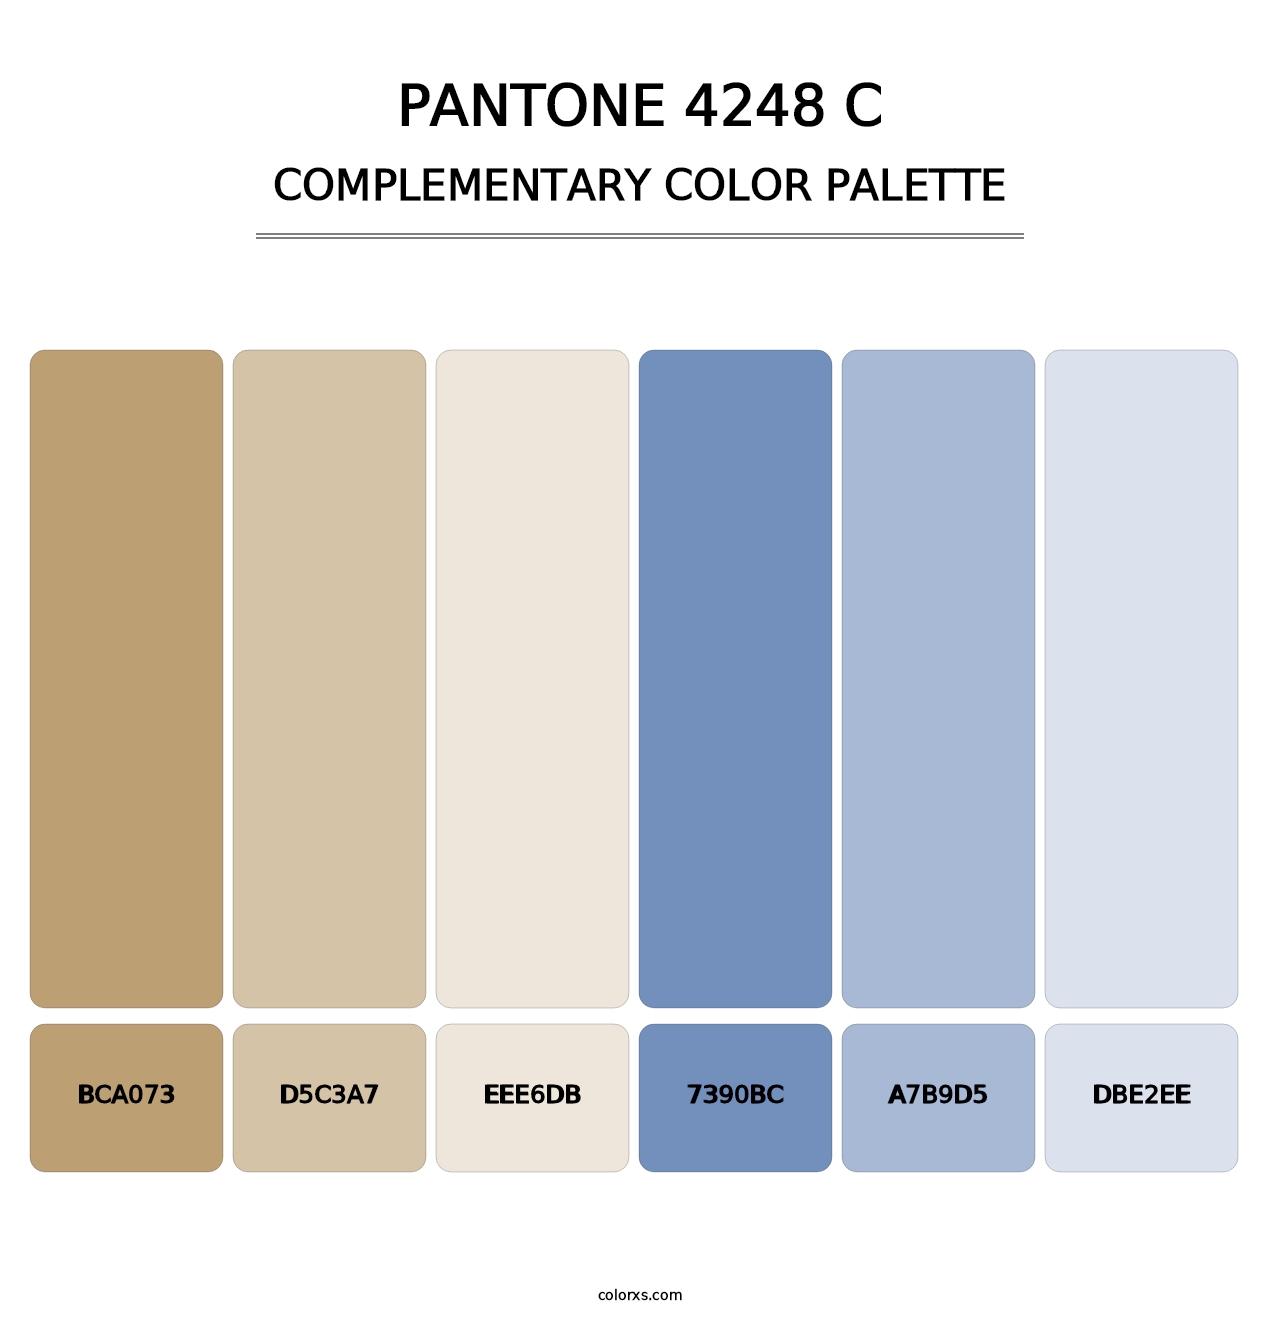 PANTONE 4248 C - Complementary Color Palette